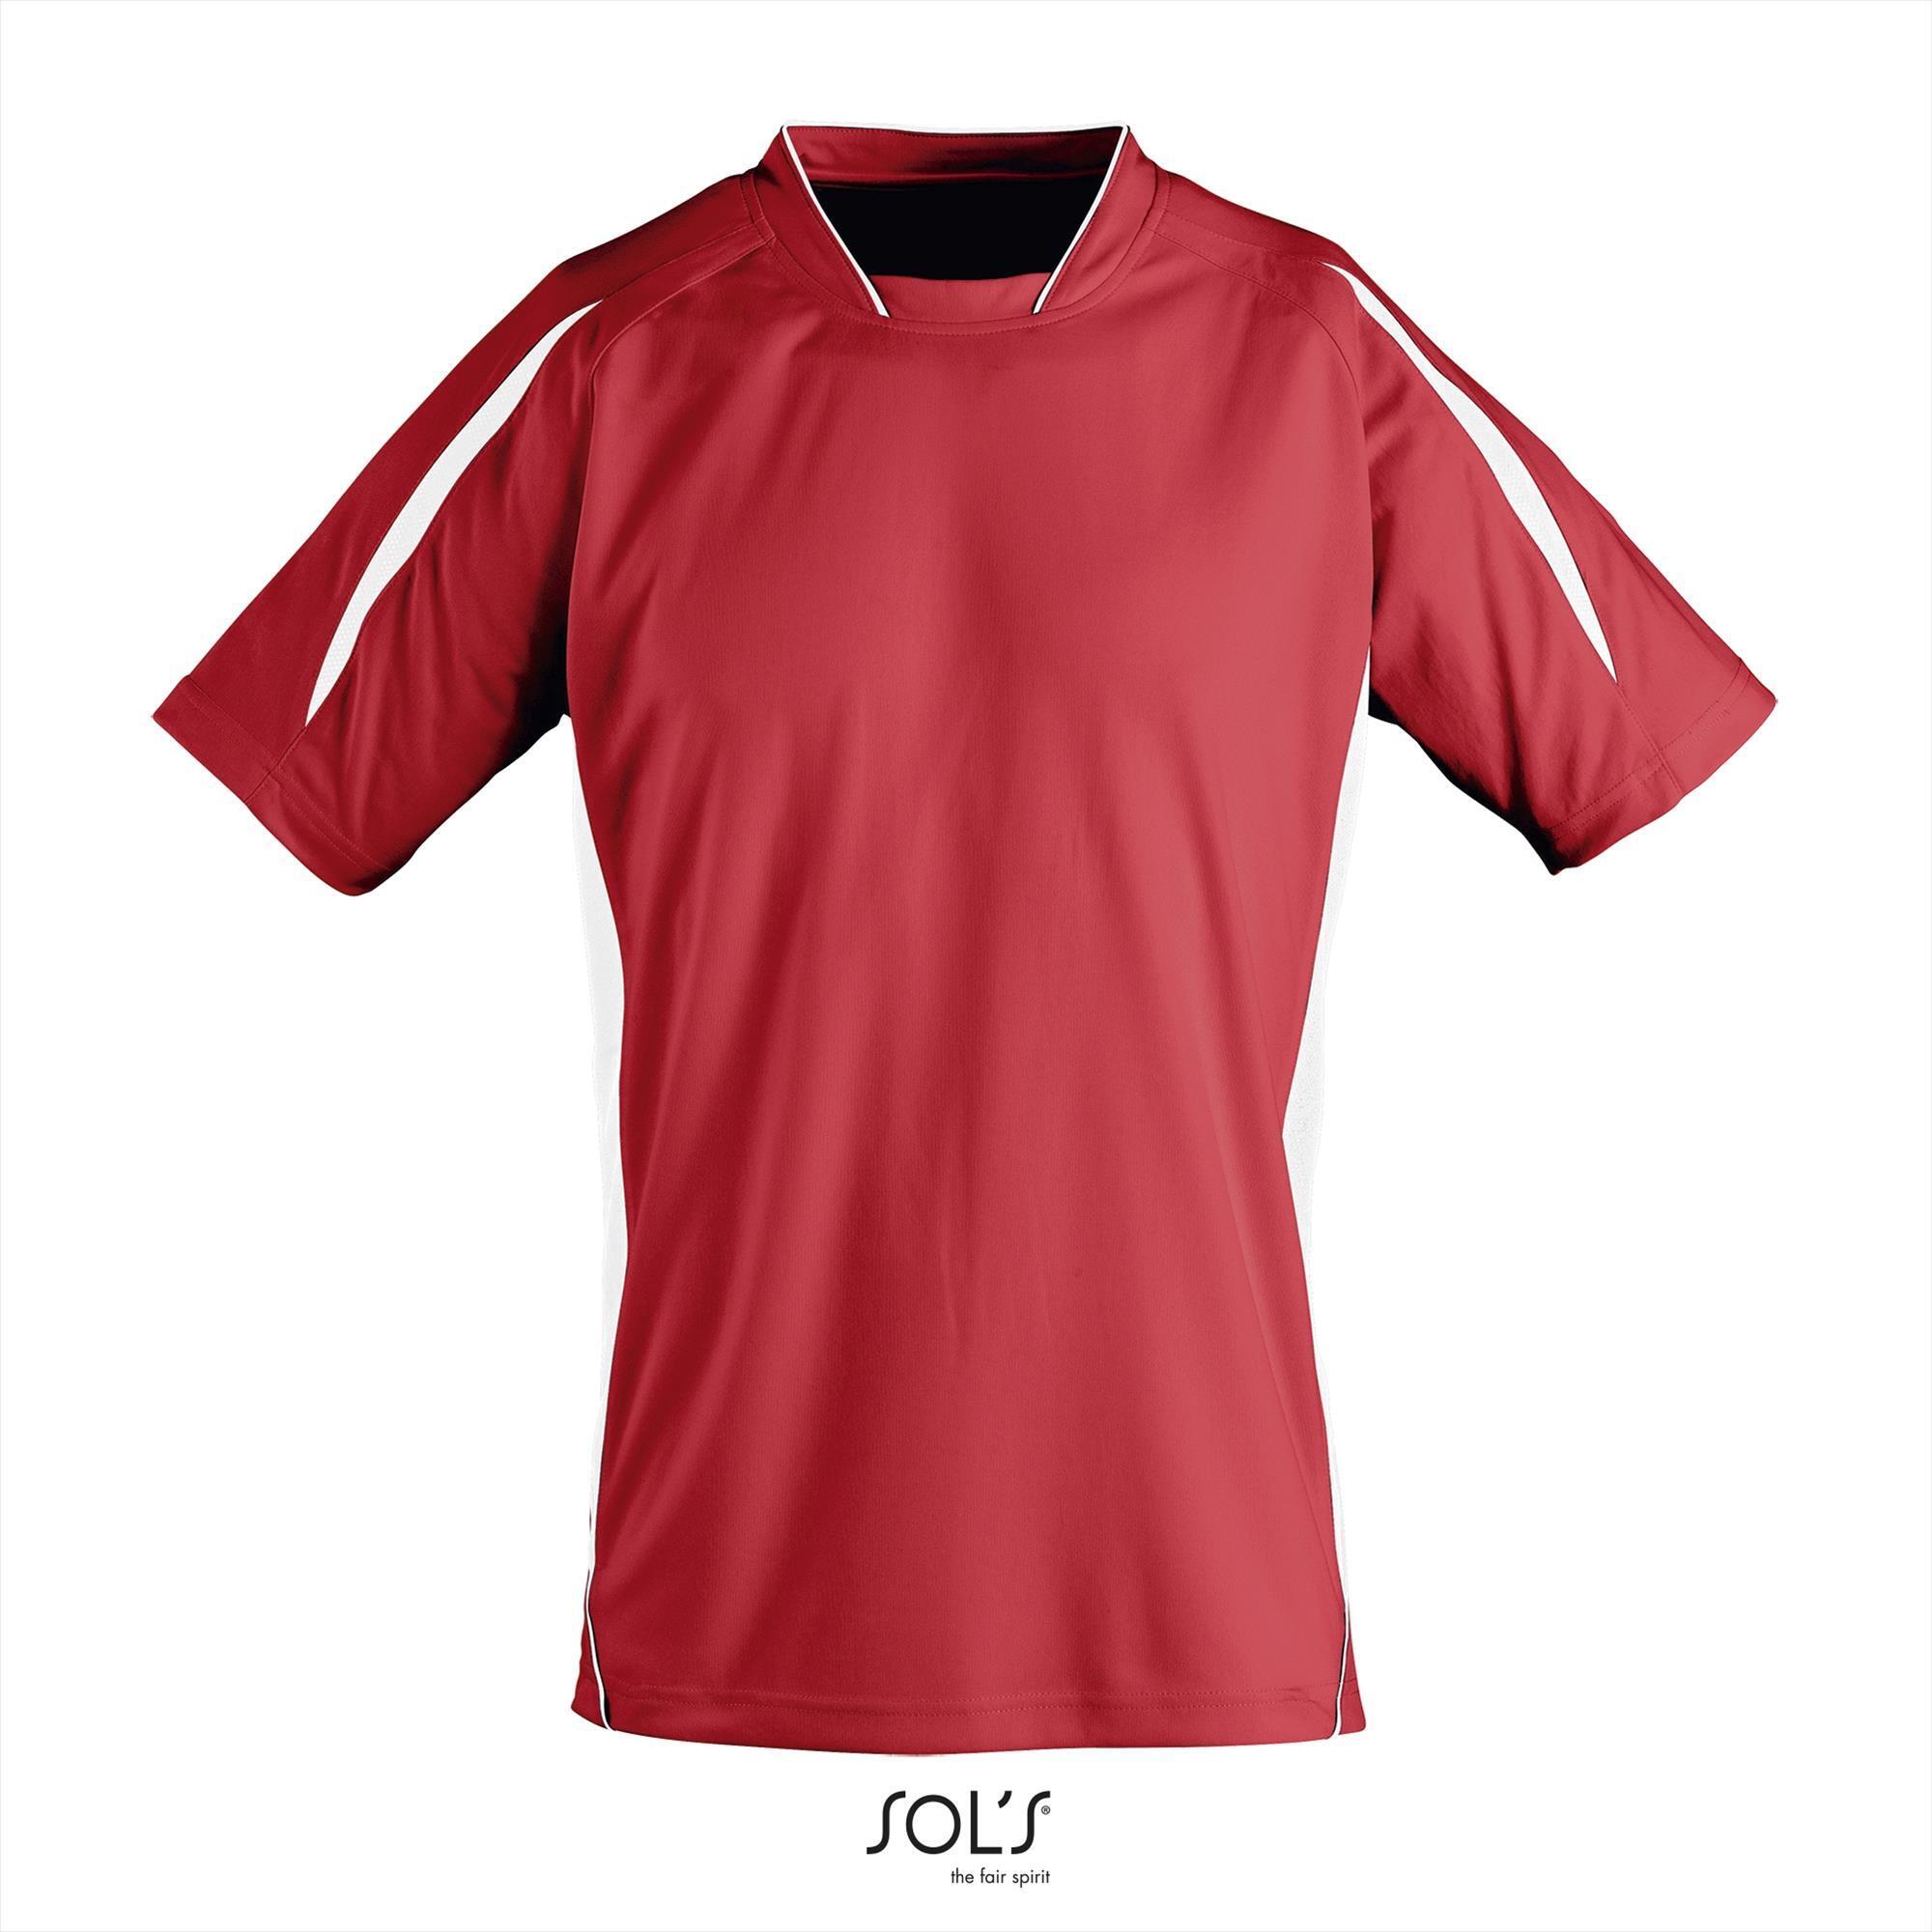 Kinder sportshirt rood met wit sportief sport shirt personaliseren sport shirt